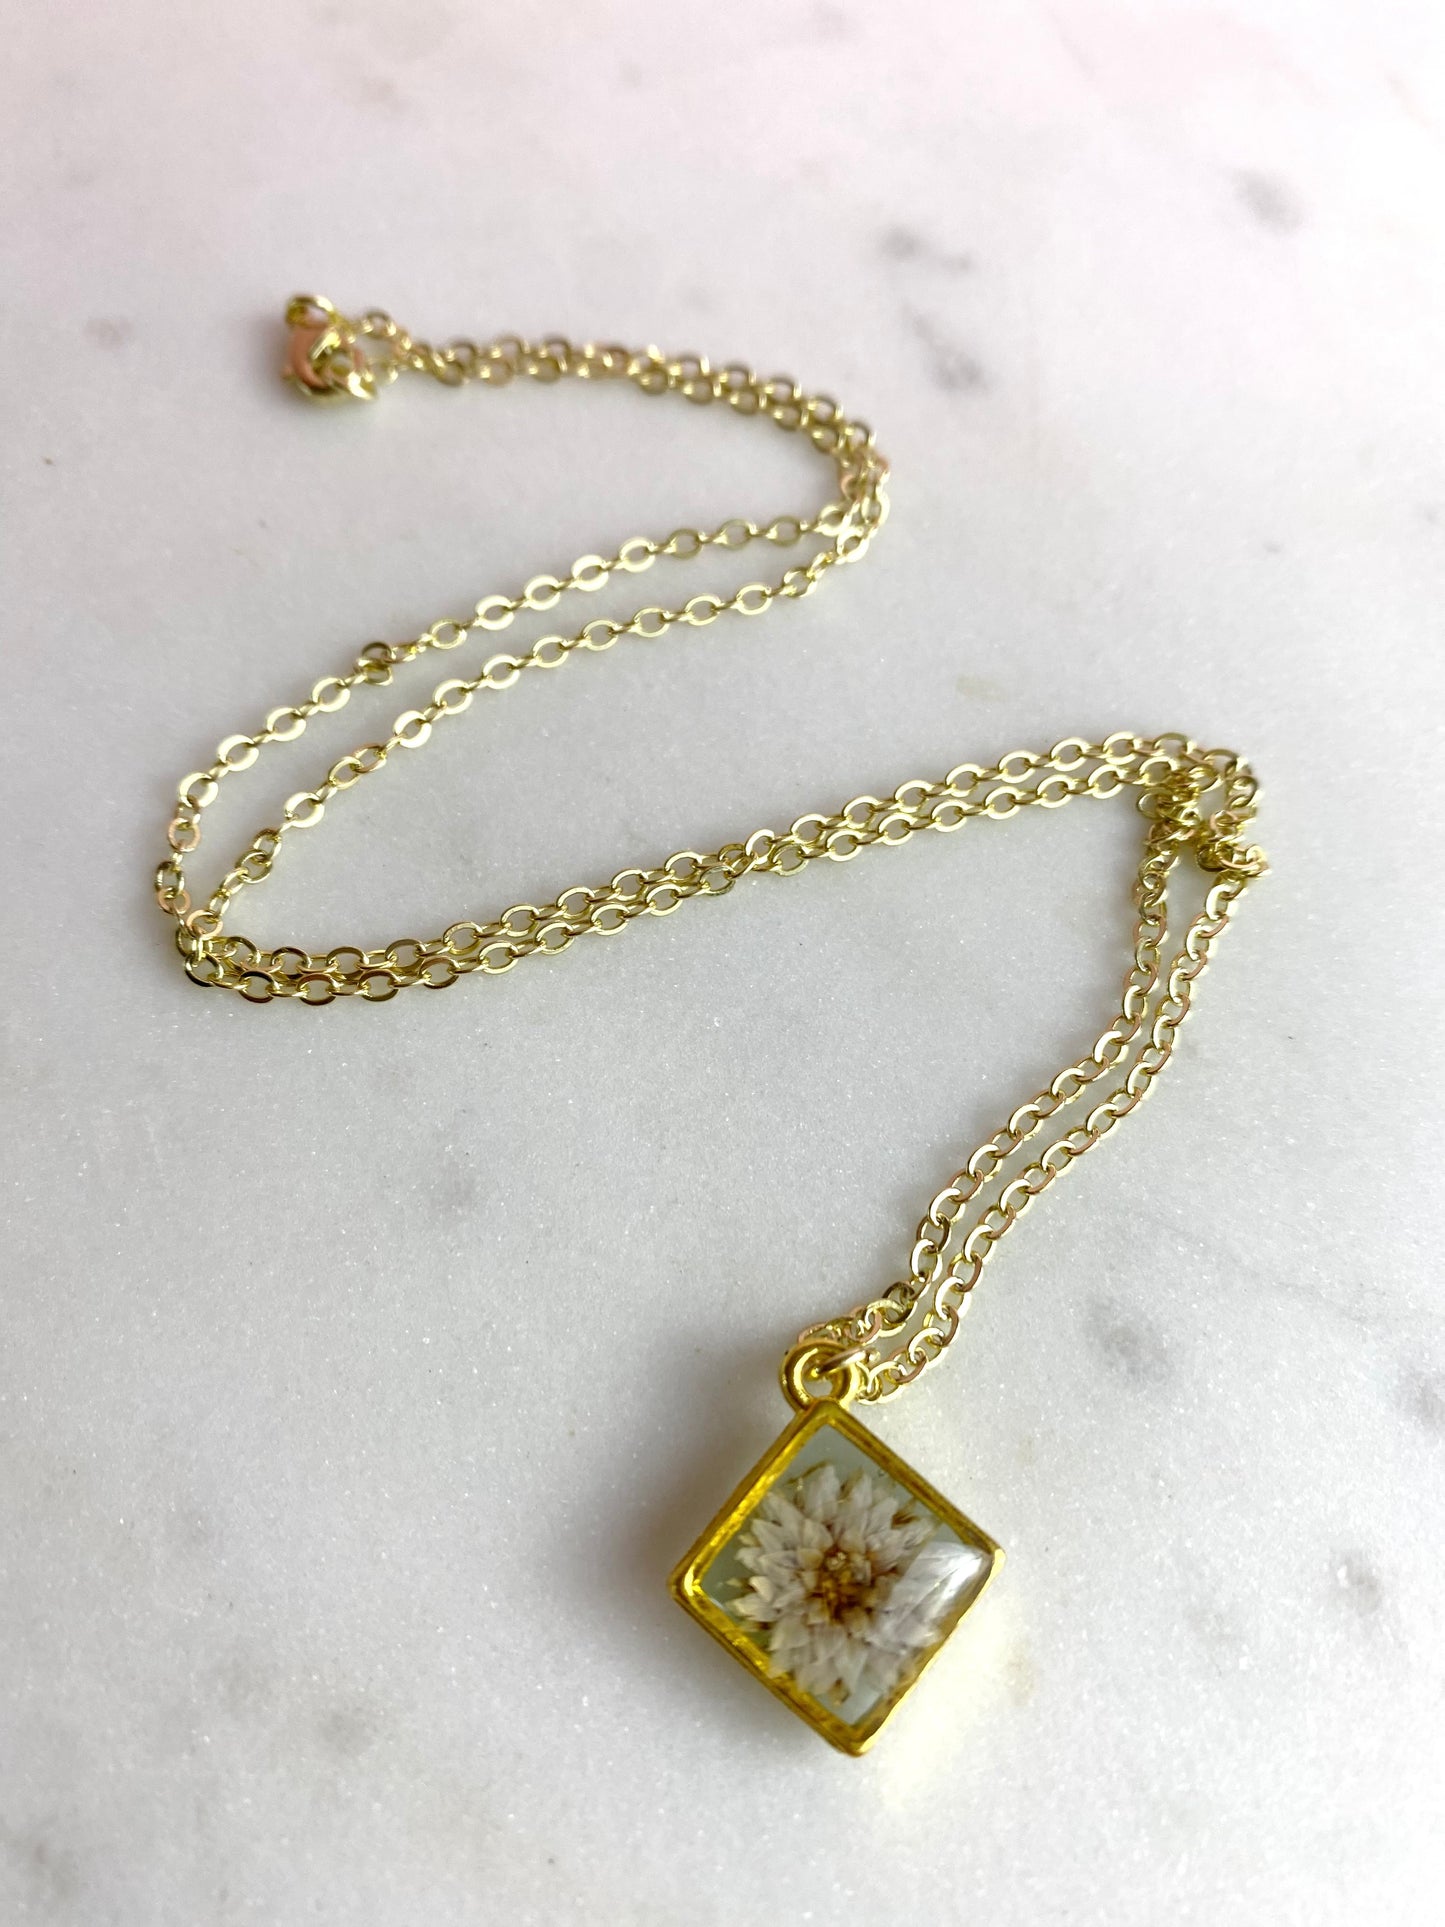 Pressed Flower Necklace | White Daisy Diamond | Handmade Jewelry